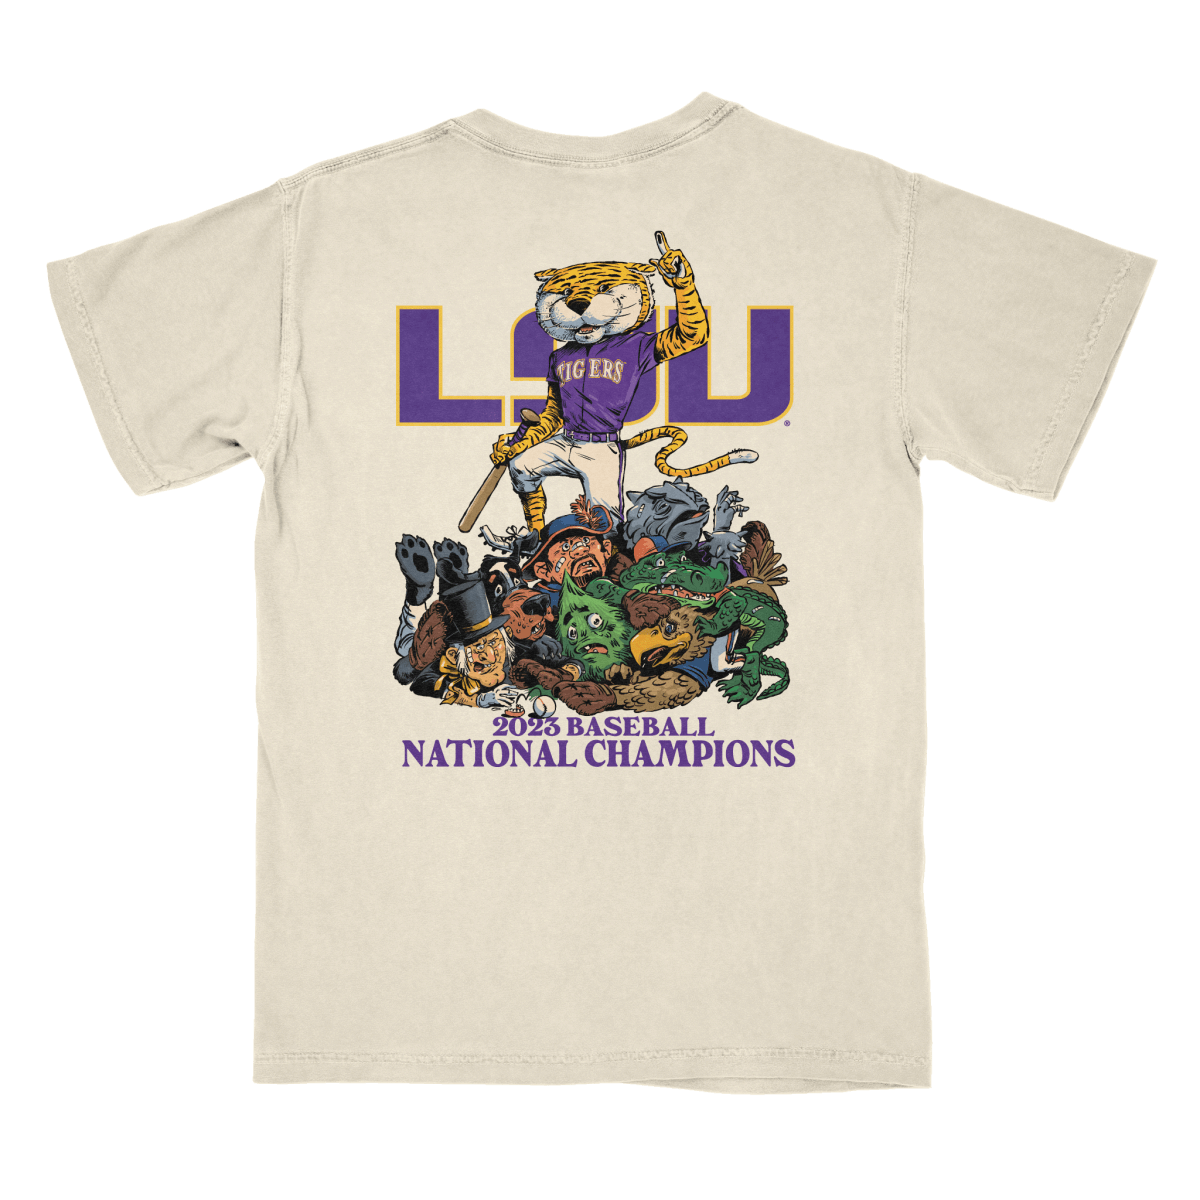 Lsu Tigers Baseball National Champions Hawaiian Shirt - Shibtee Clothing